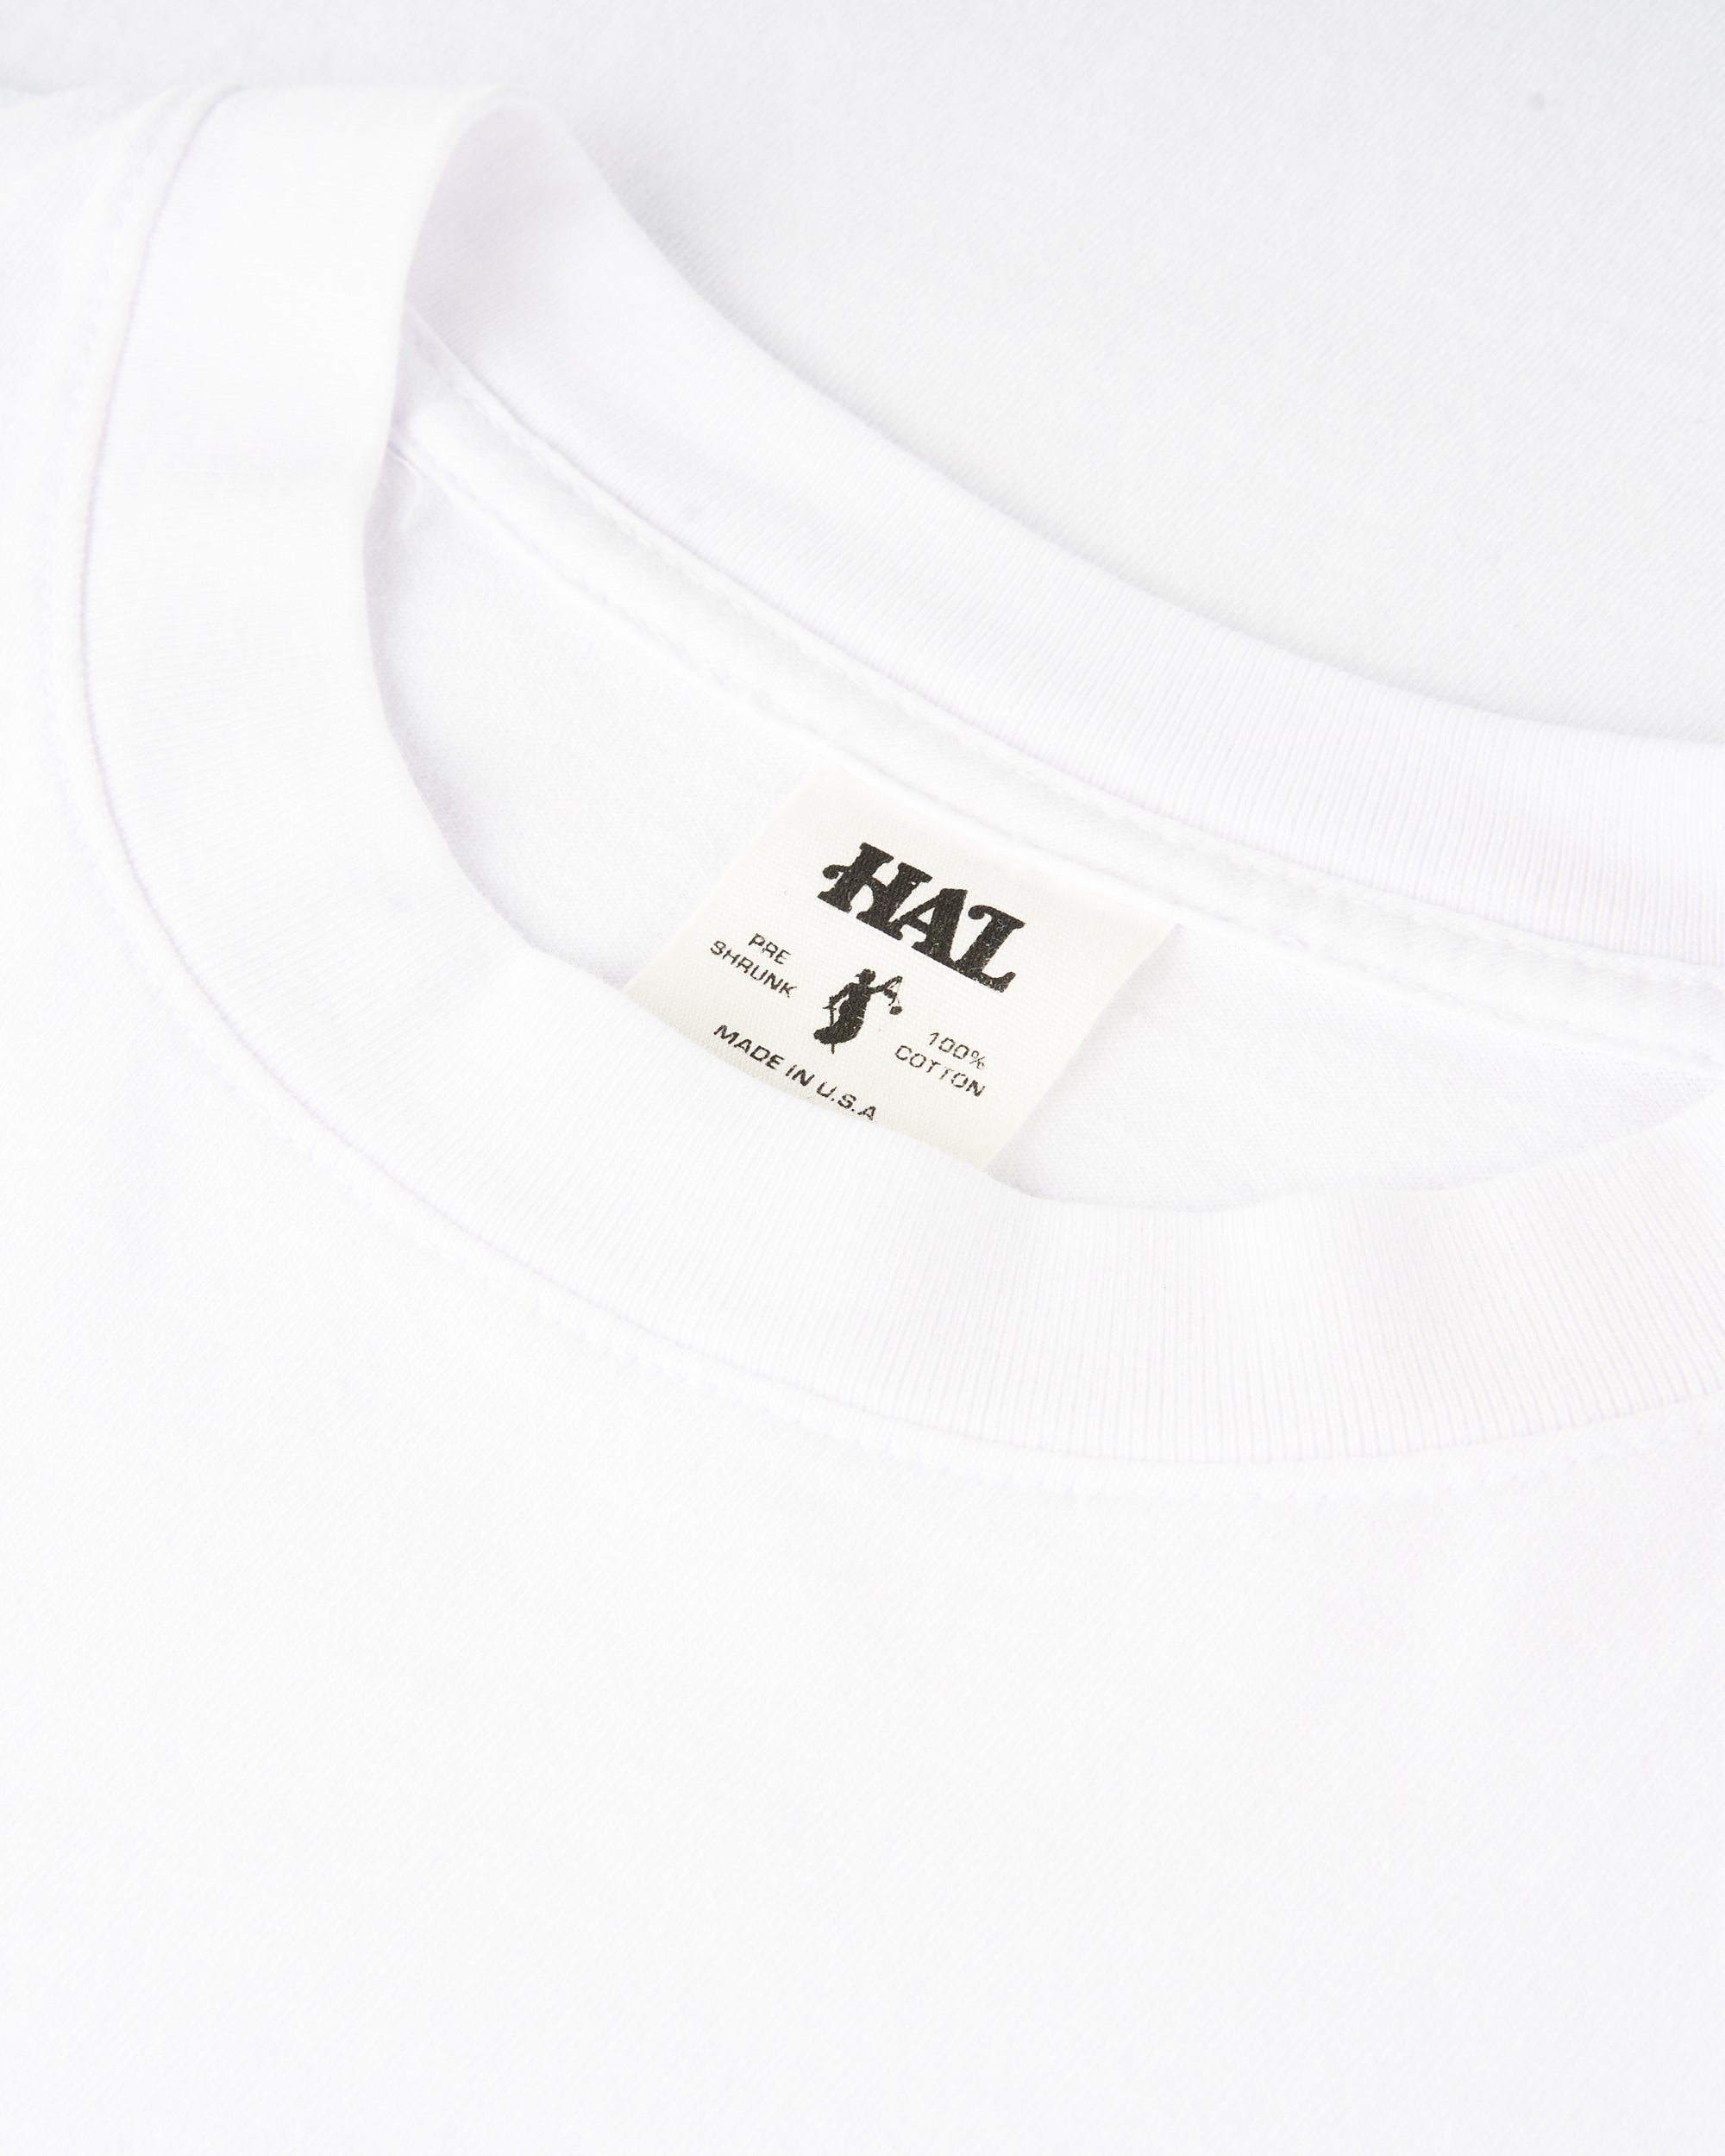 Simple L/S T-shirt - White